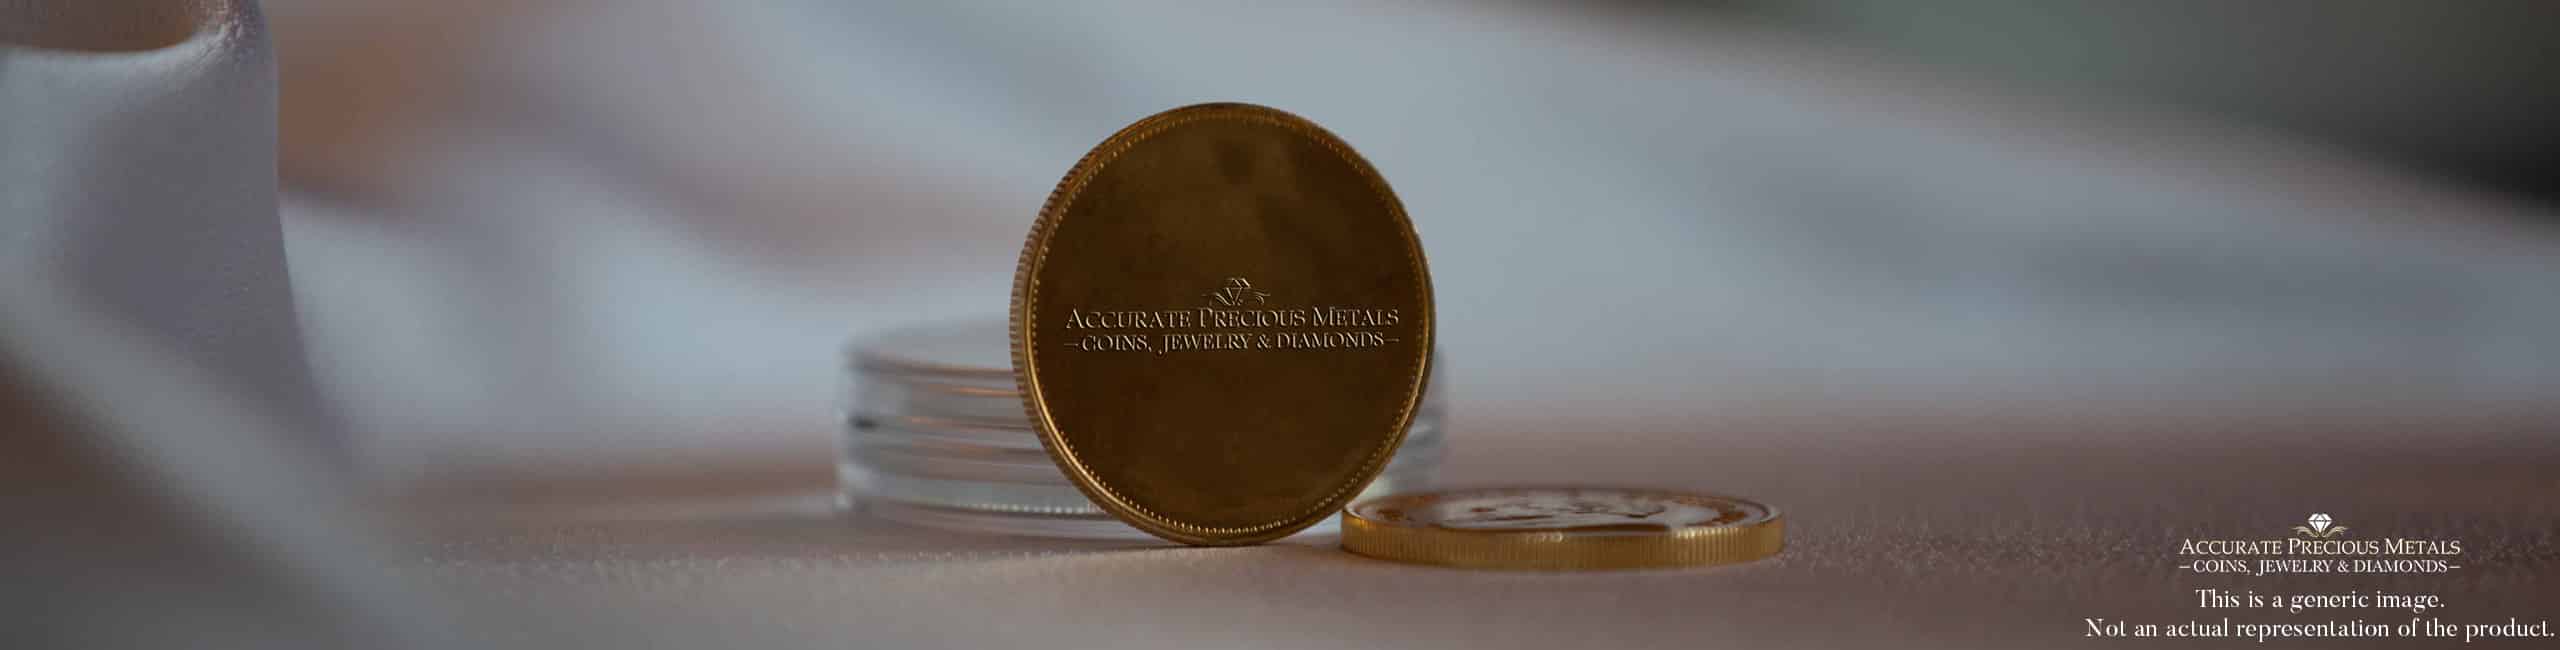 Captivating Perth Mint Gold Lunar Series 1/4 oz Coin - Symbol of Zodiac Animals and Precious Metal